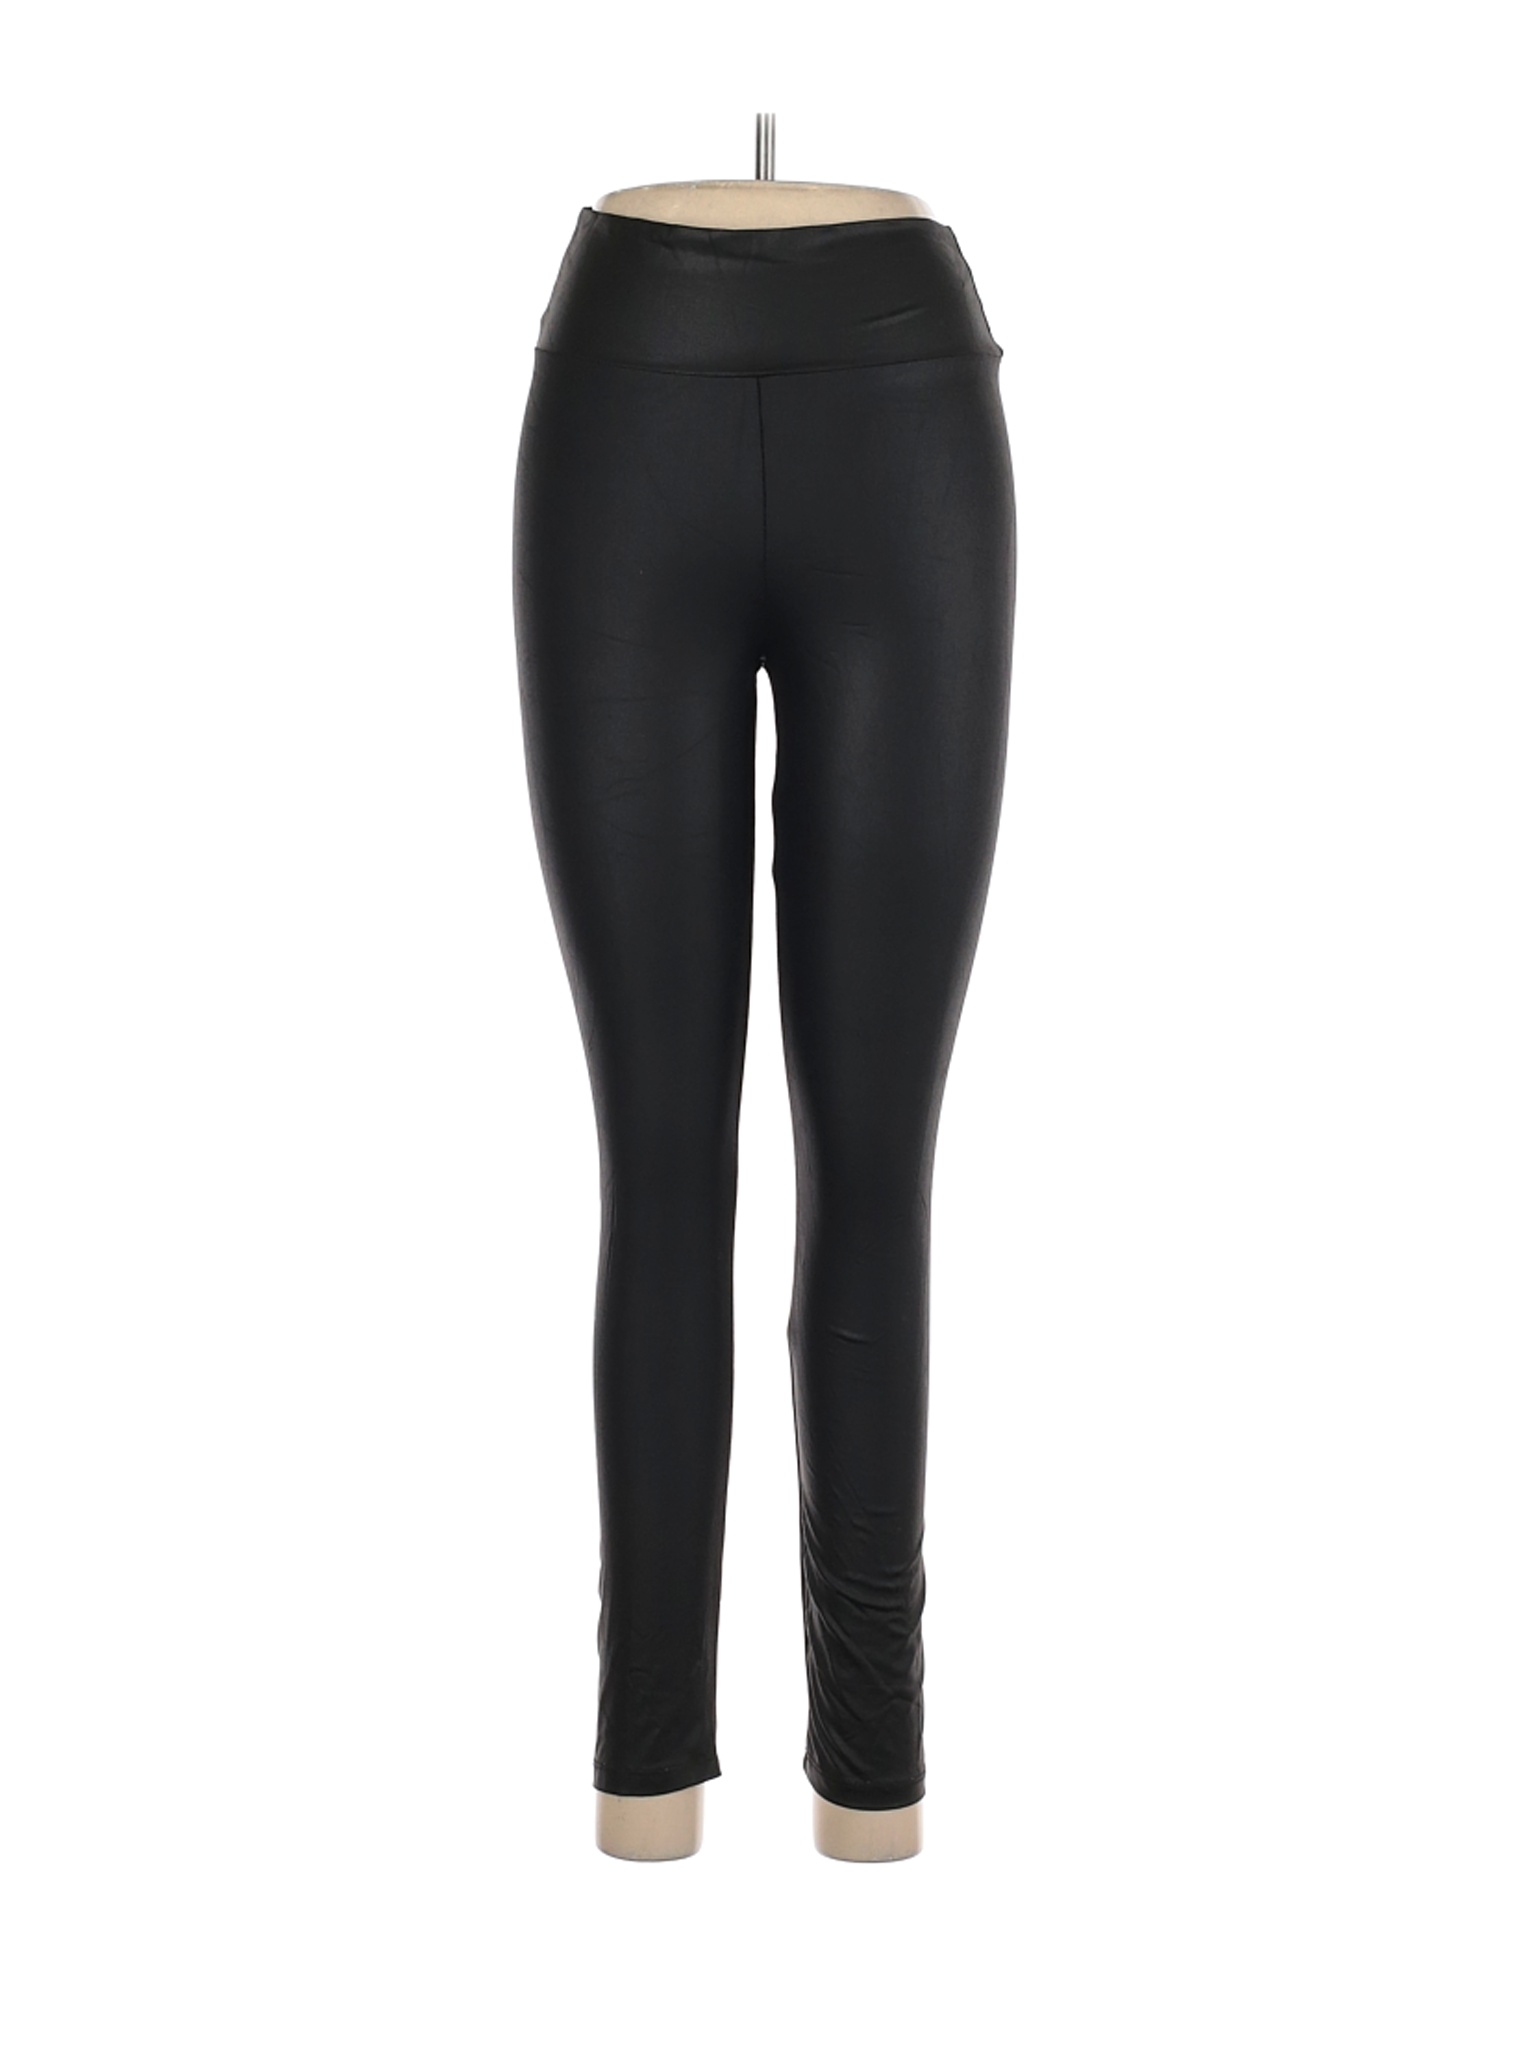 Assorted Brands Women Black Faux Leather Pants M | eBay